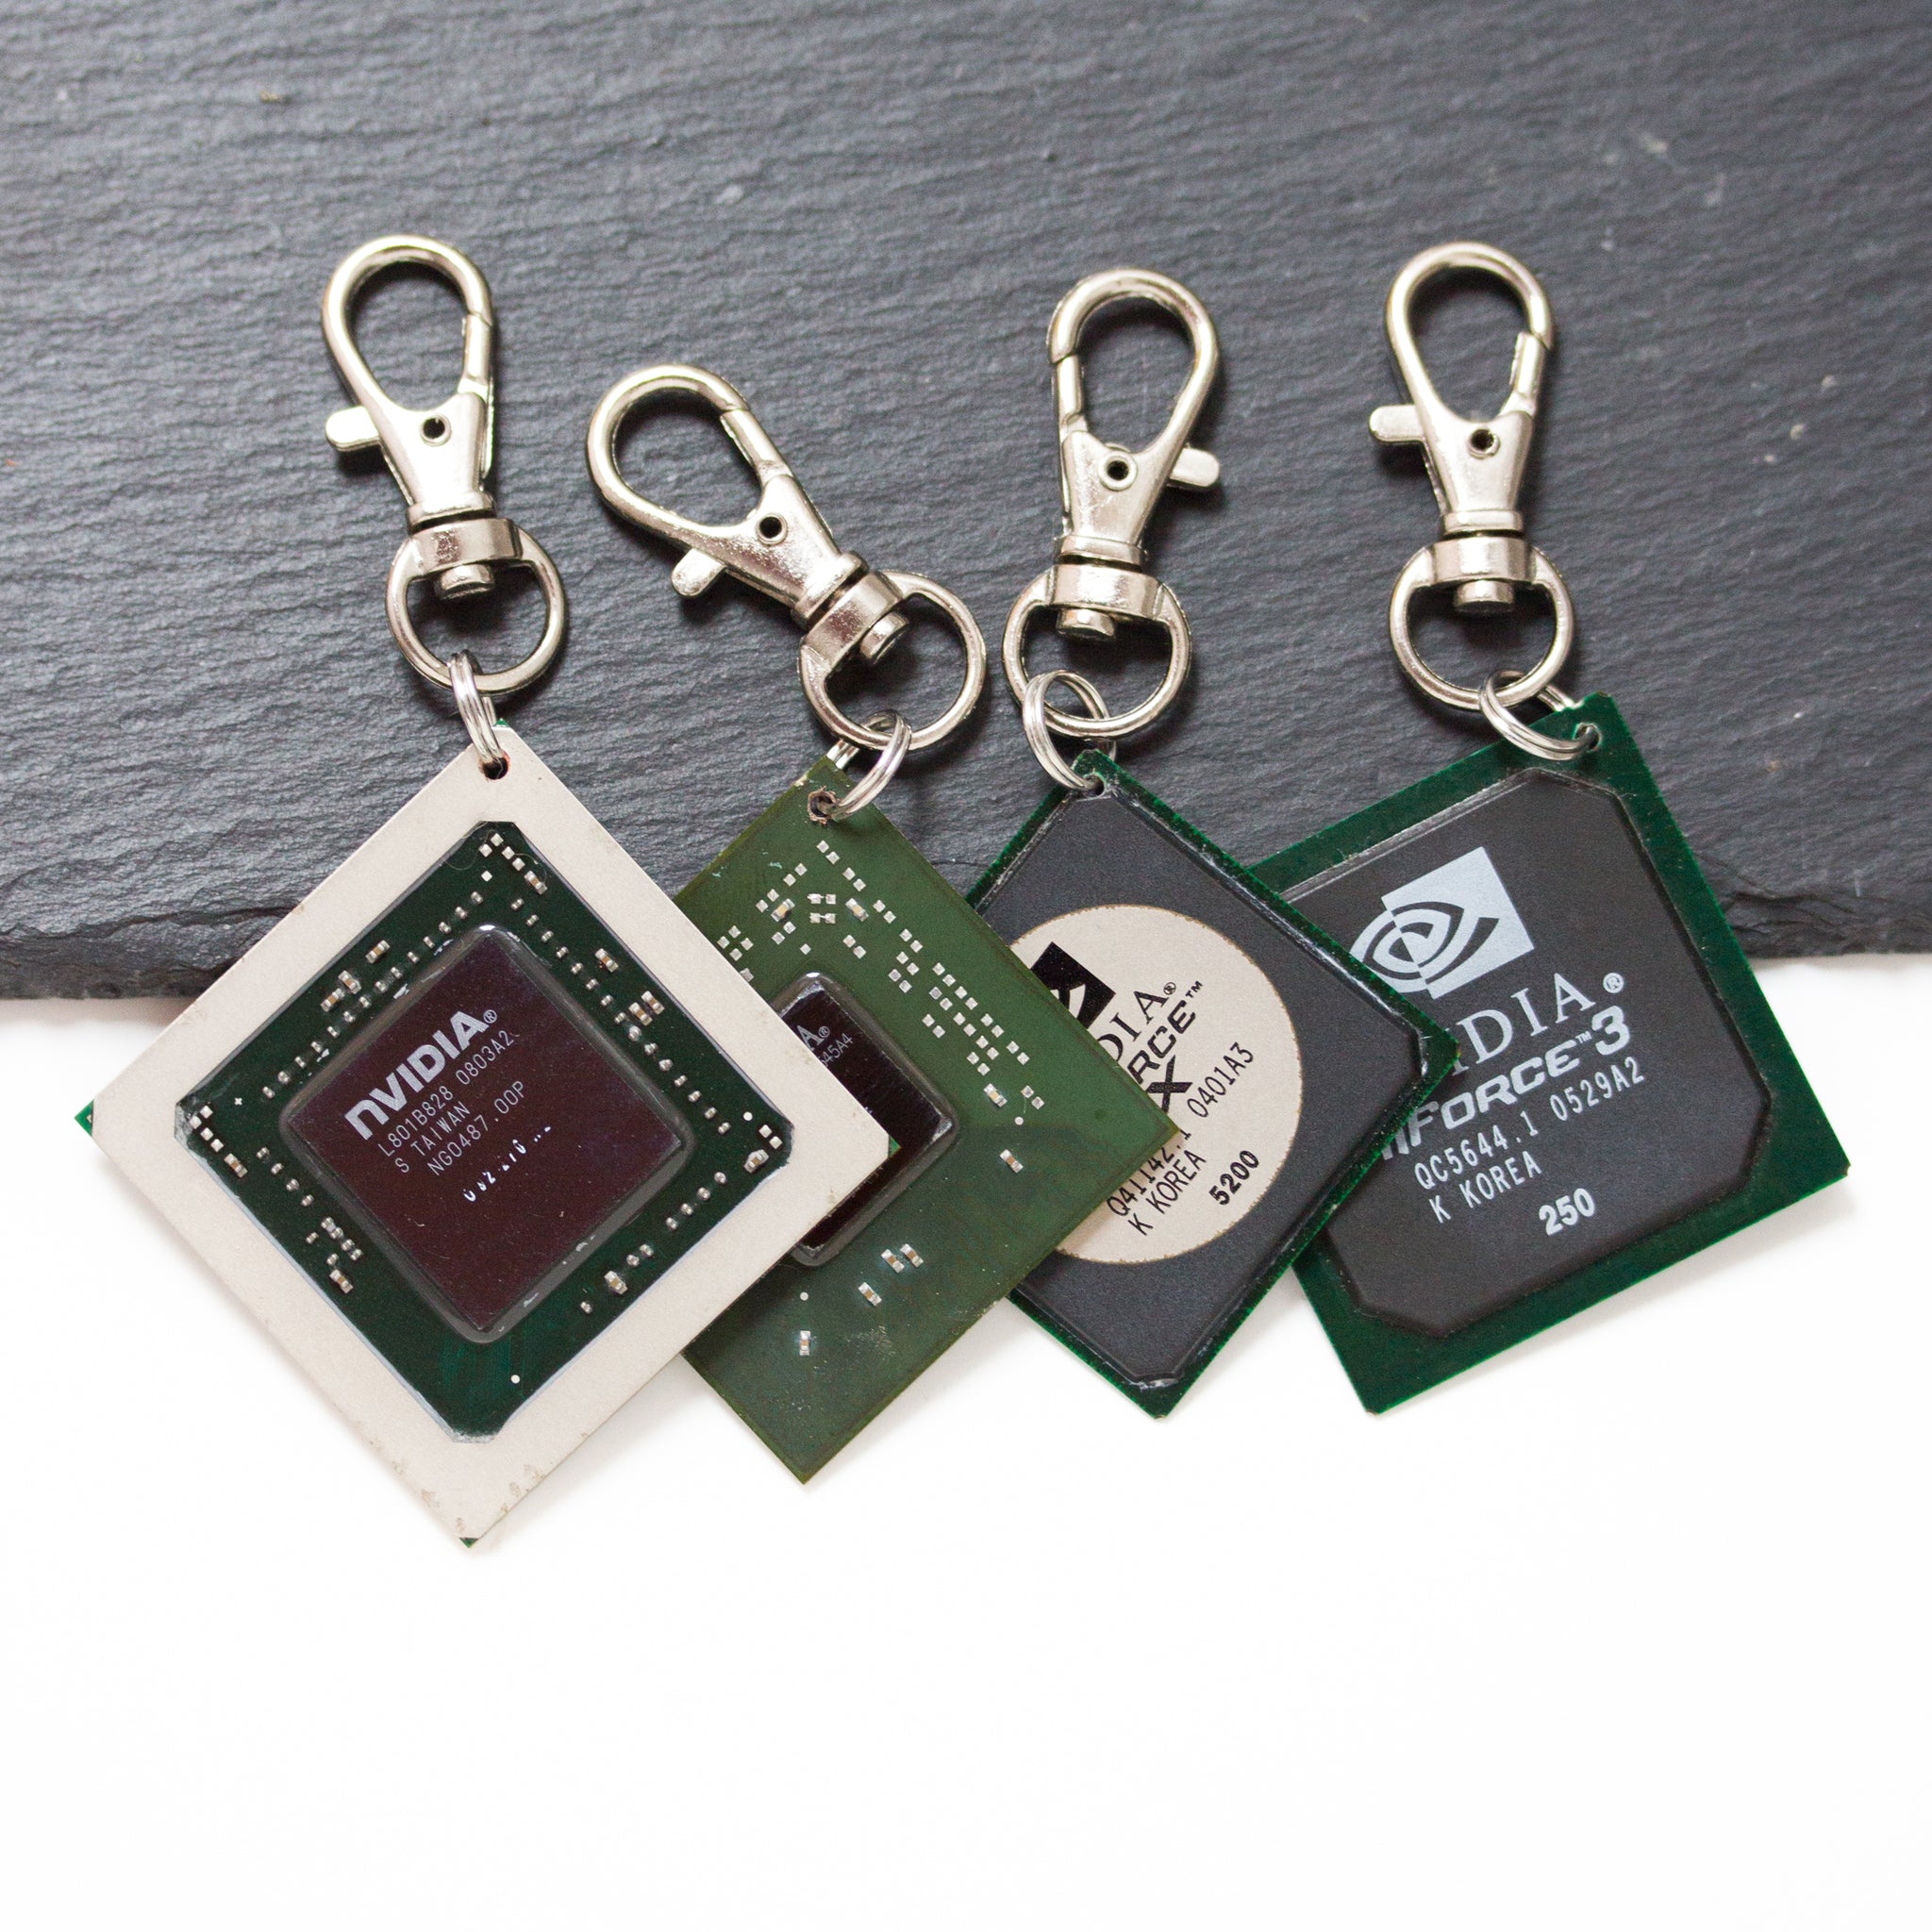 Chipset keychain, recycled computer keychain, nVidia graphic processor, GPU